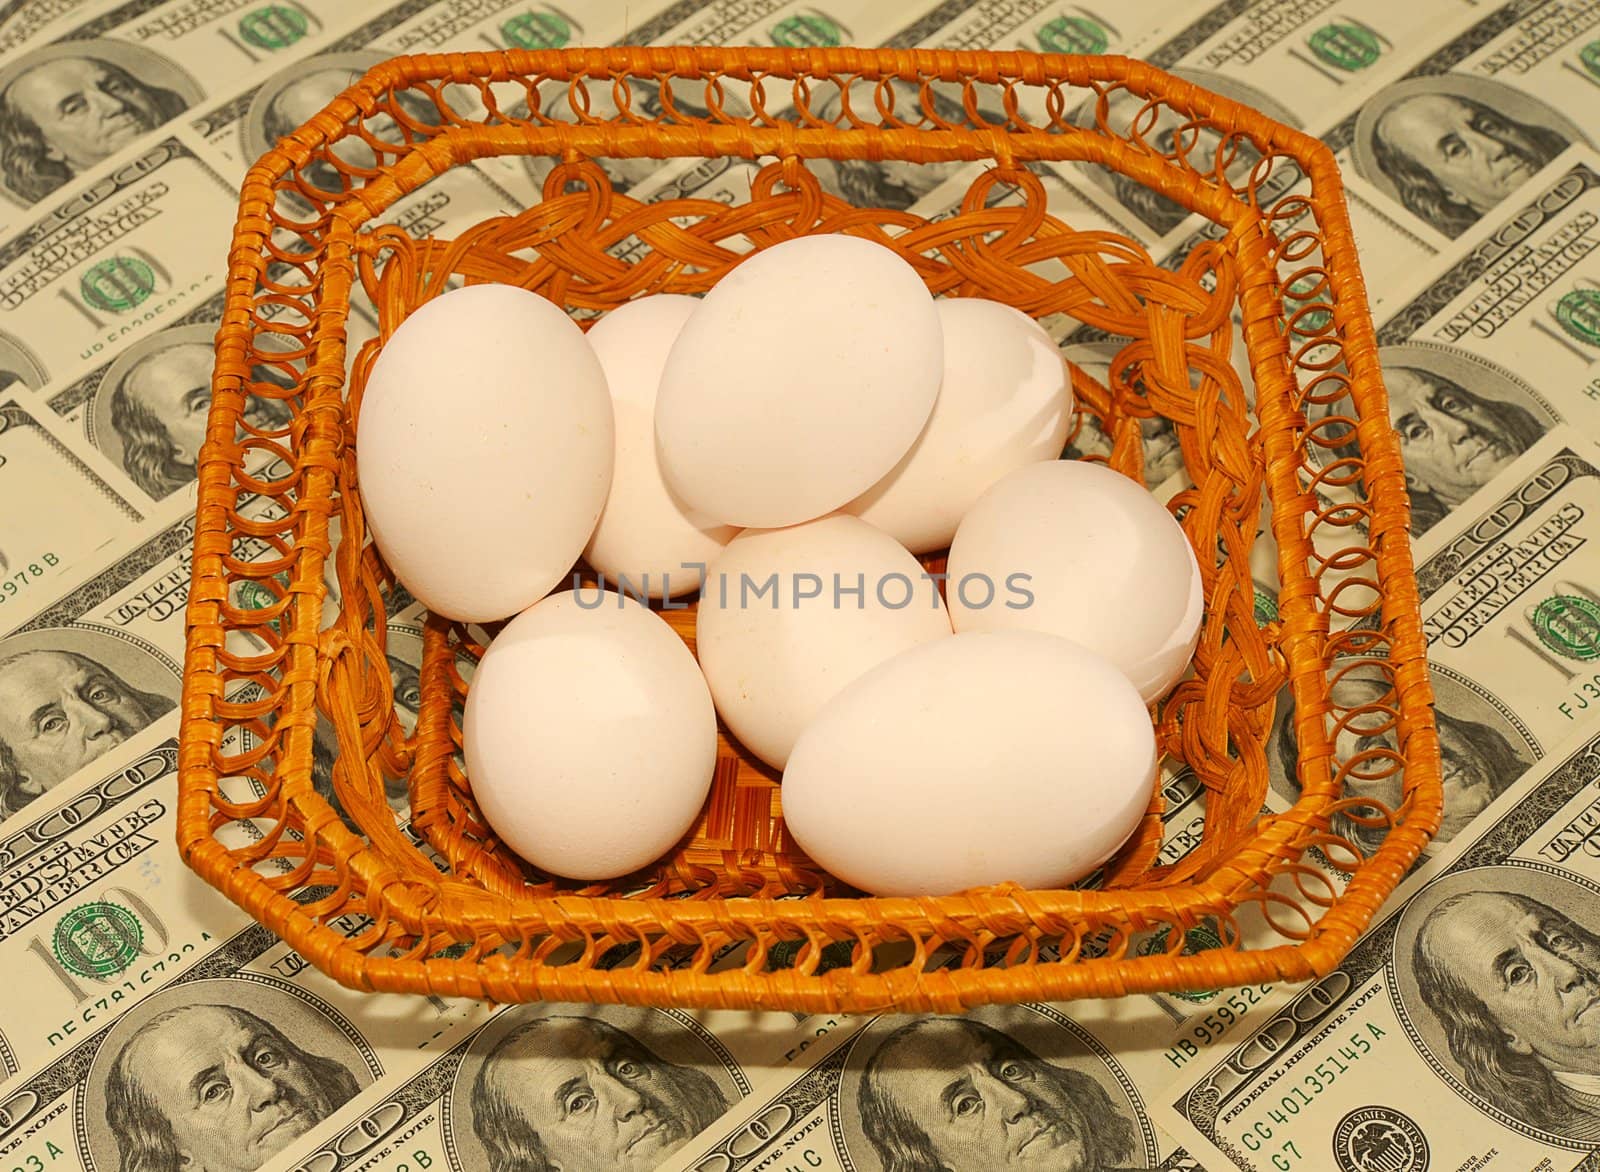 Eggs In The Basket On One Hundred Dollar Bills Background.